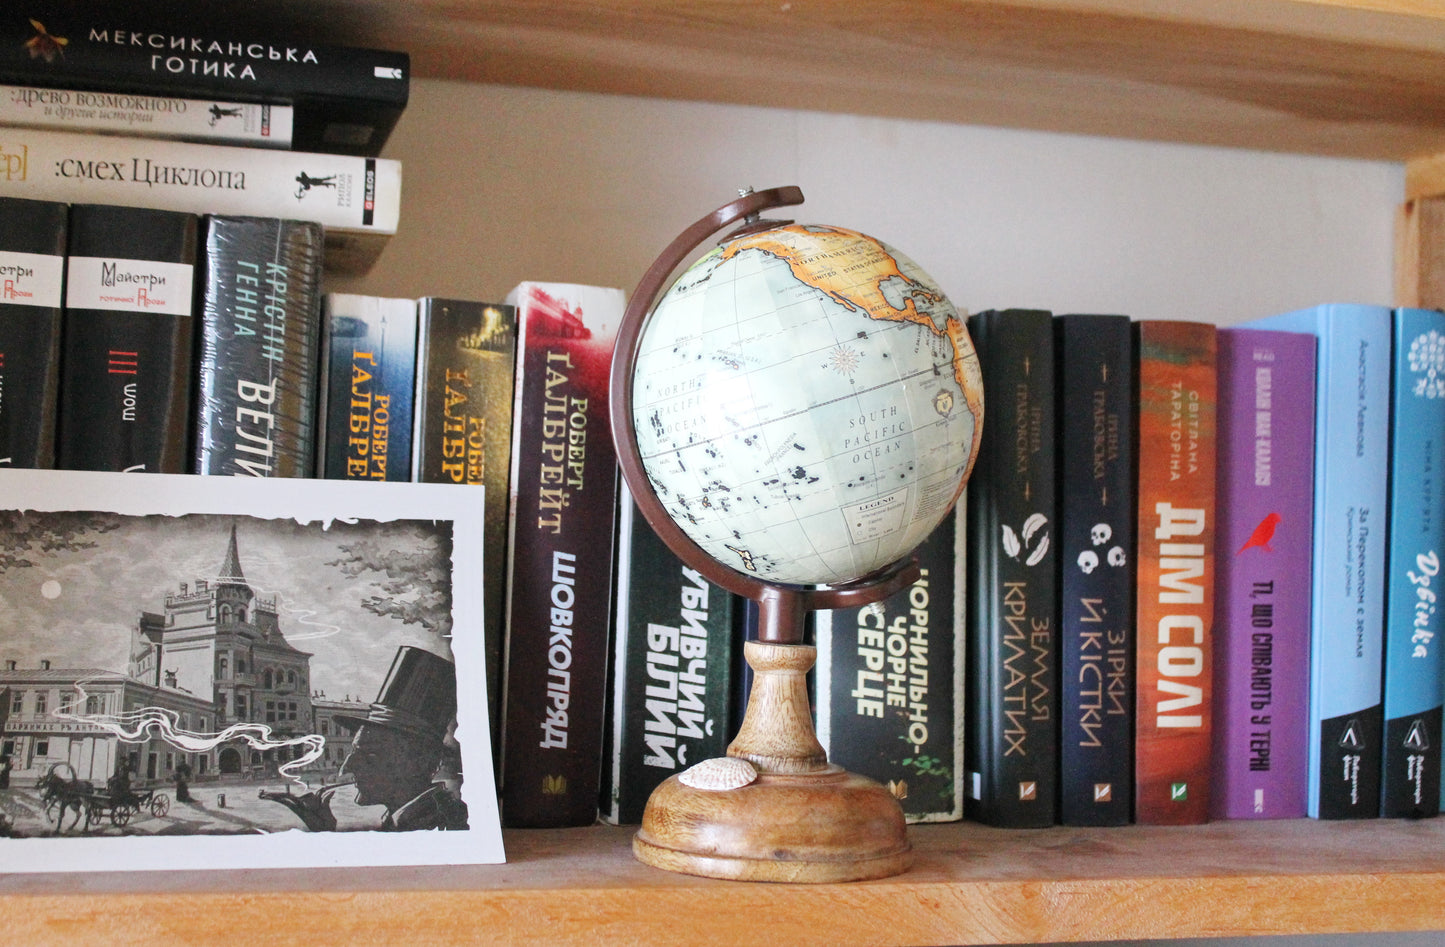 Vintage Small globe - Wooden globe - Earth globe - World globe - Desk globe - School globe - Gift idea